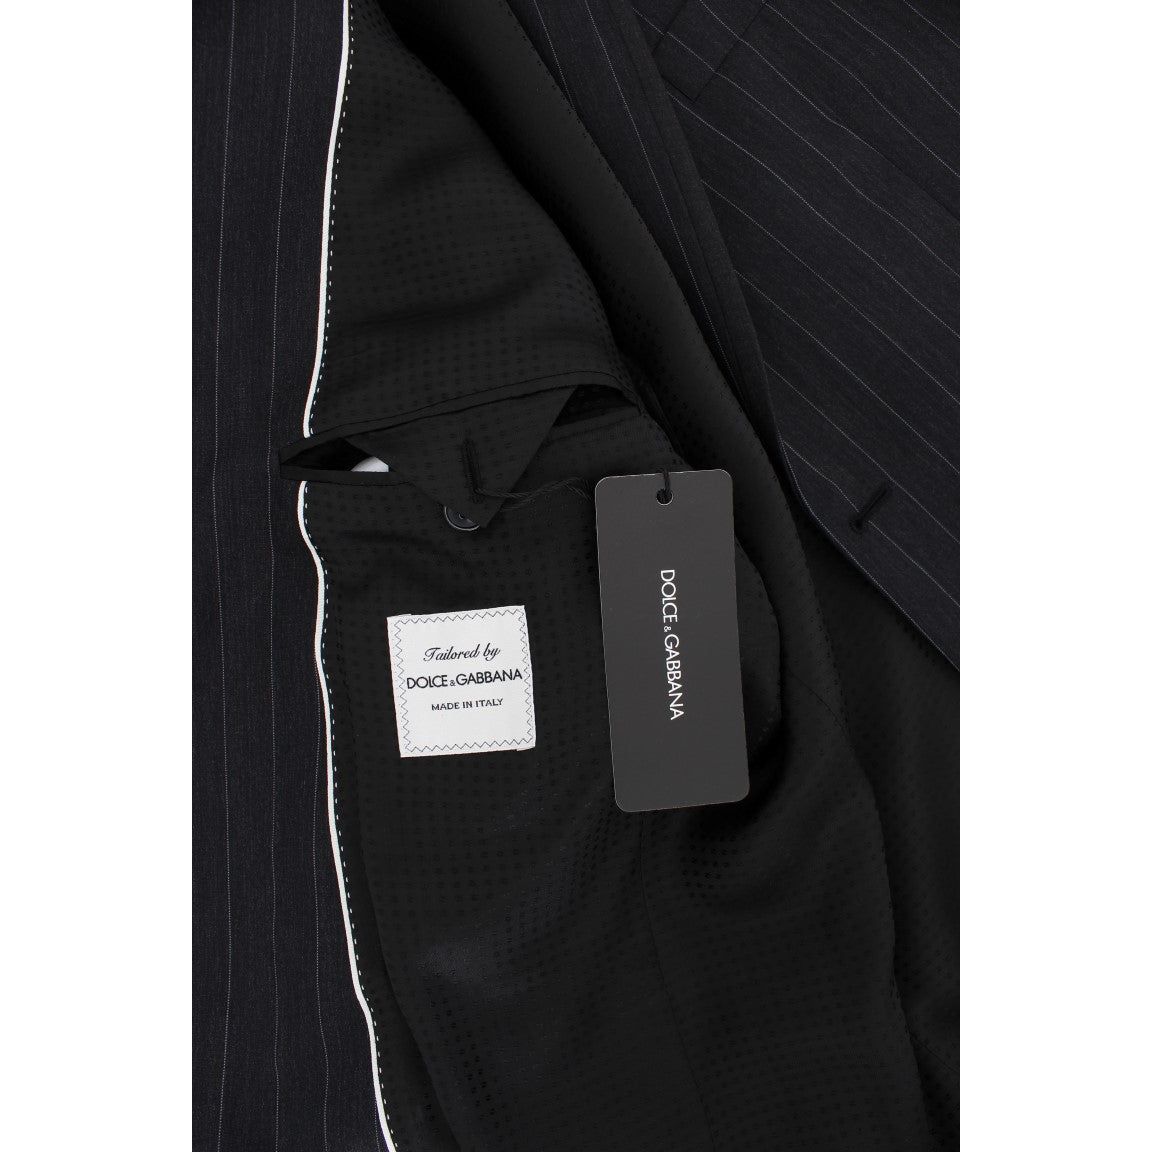 Dolce & Gabbana Chic Gray Striped Wool Blazer Jacket gray-striped-slim-fit-wool-blazer 223272-gray-striped-slim-fit-wool-blazer-7.jpg